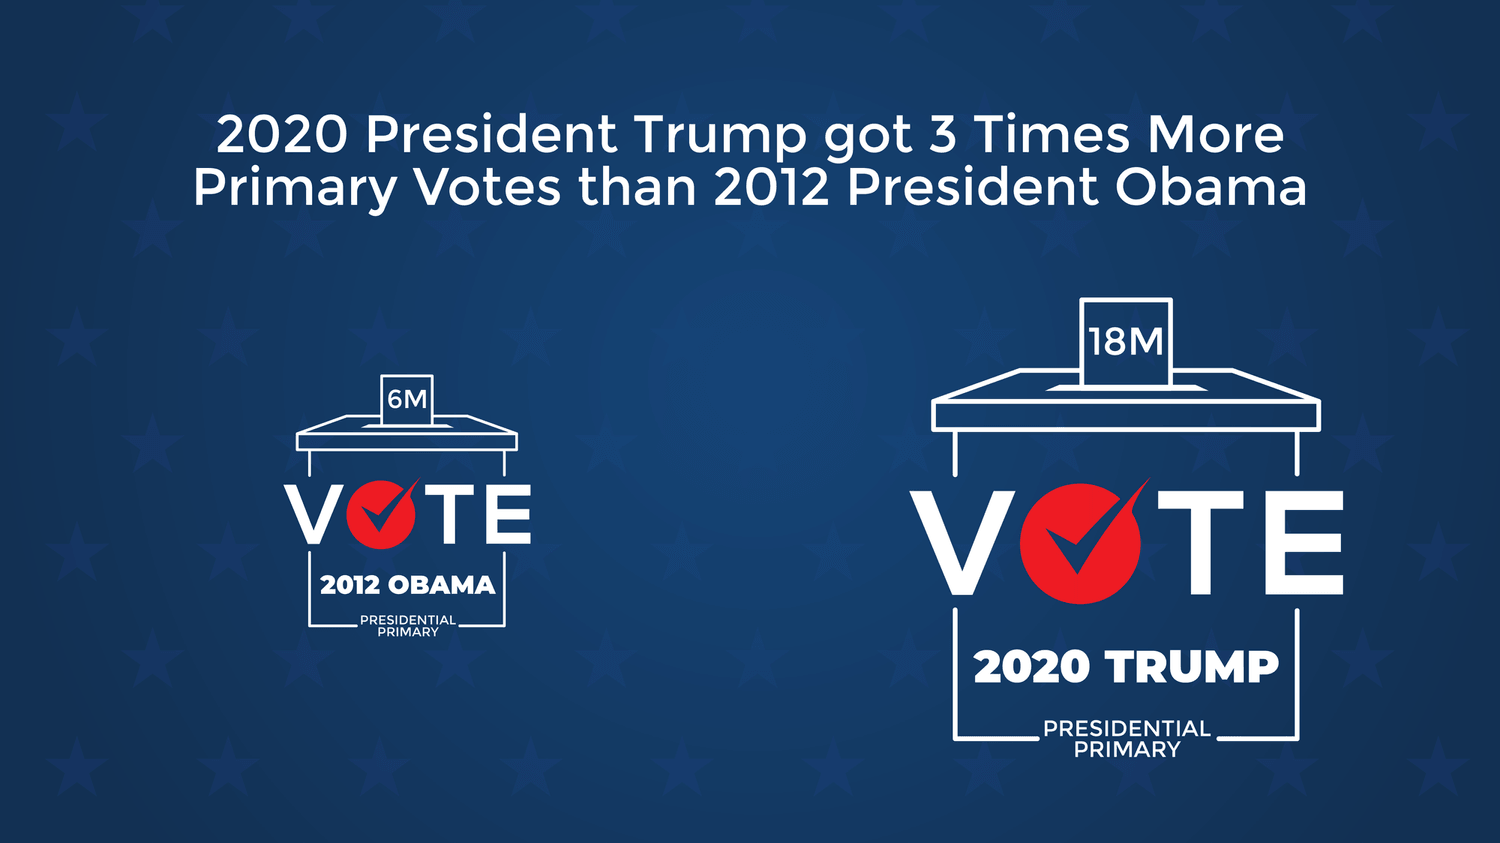 2020 President Trump got 3 Times More Primary Votes than 2012 President Obama